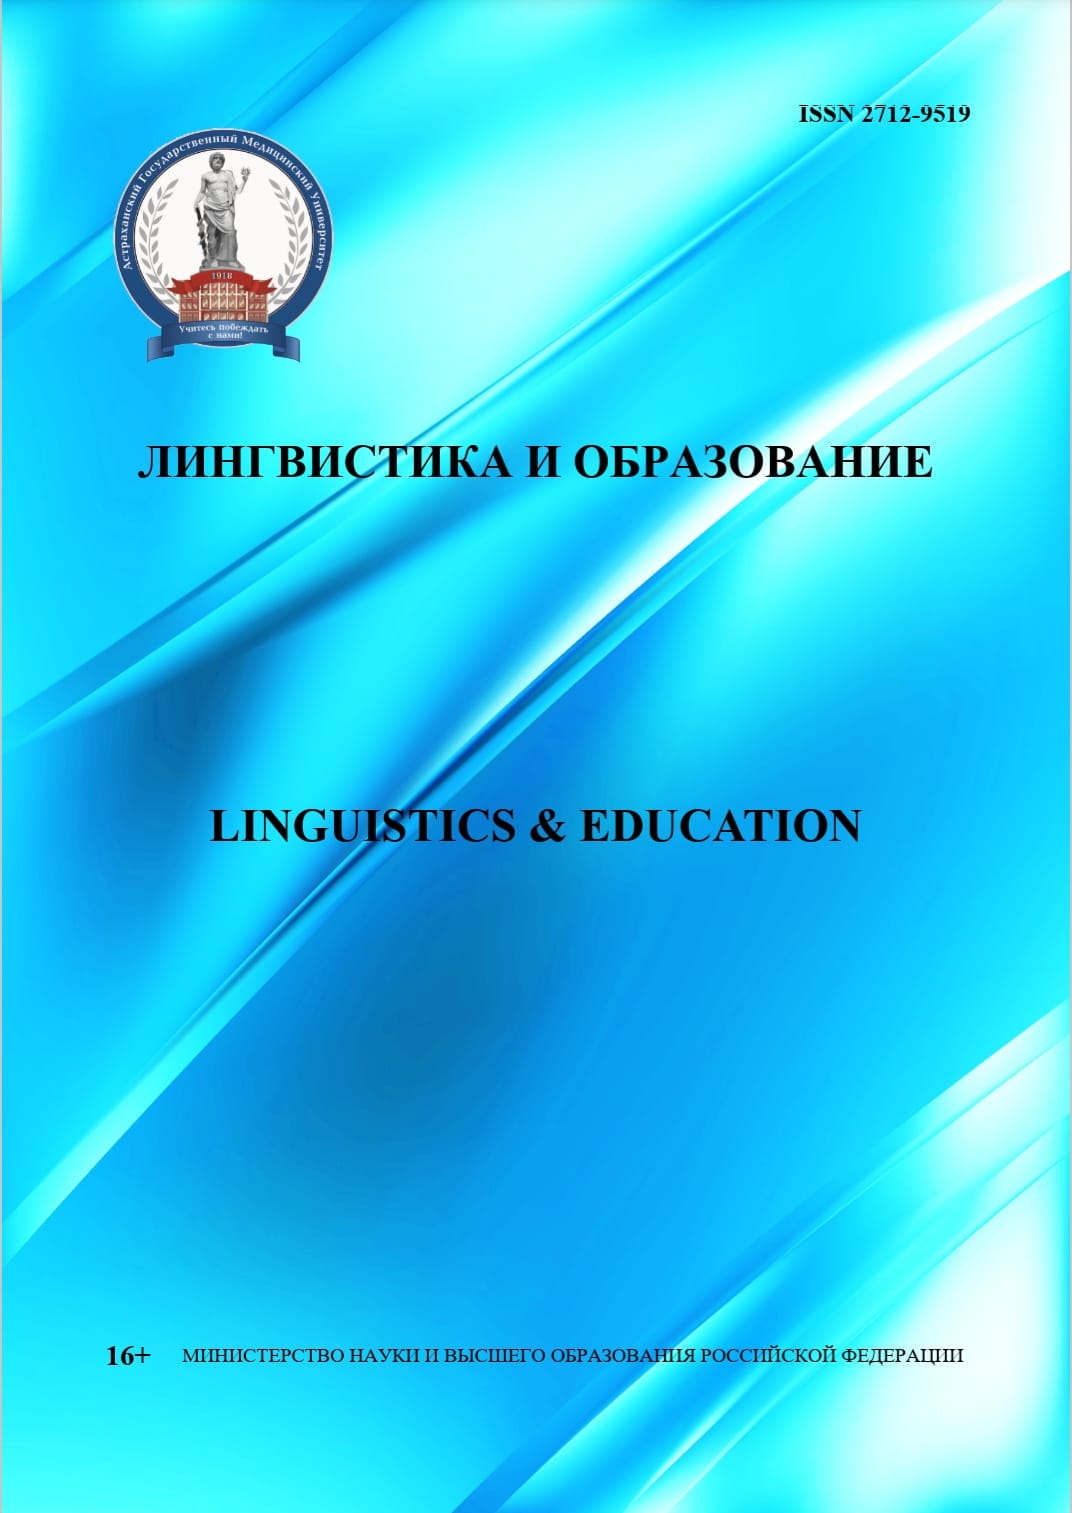                         Linguistics & Education
            